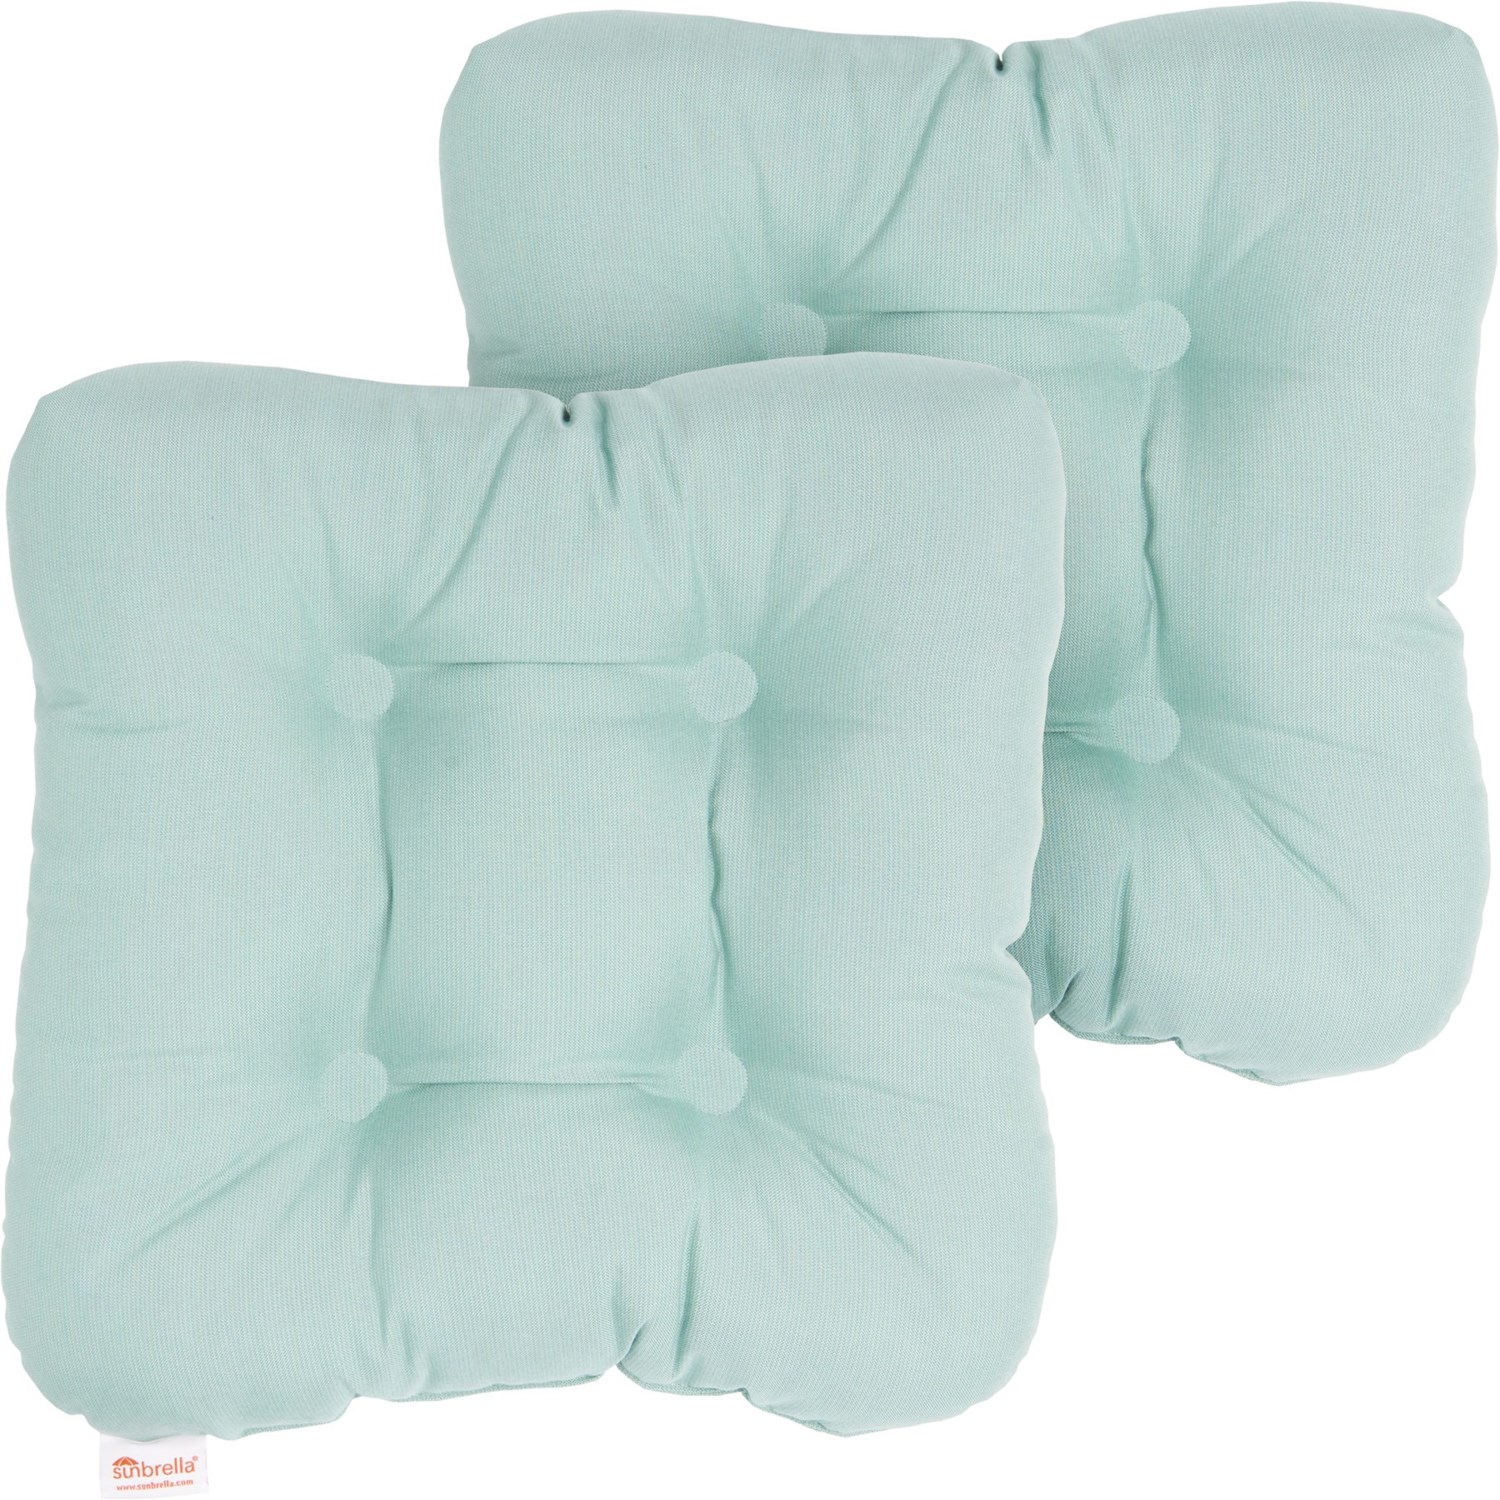 Sunbrella By Austin Horn Outdoor Chair Cushions 2 Pack 16x16” Miste Save 56